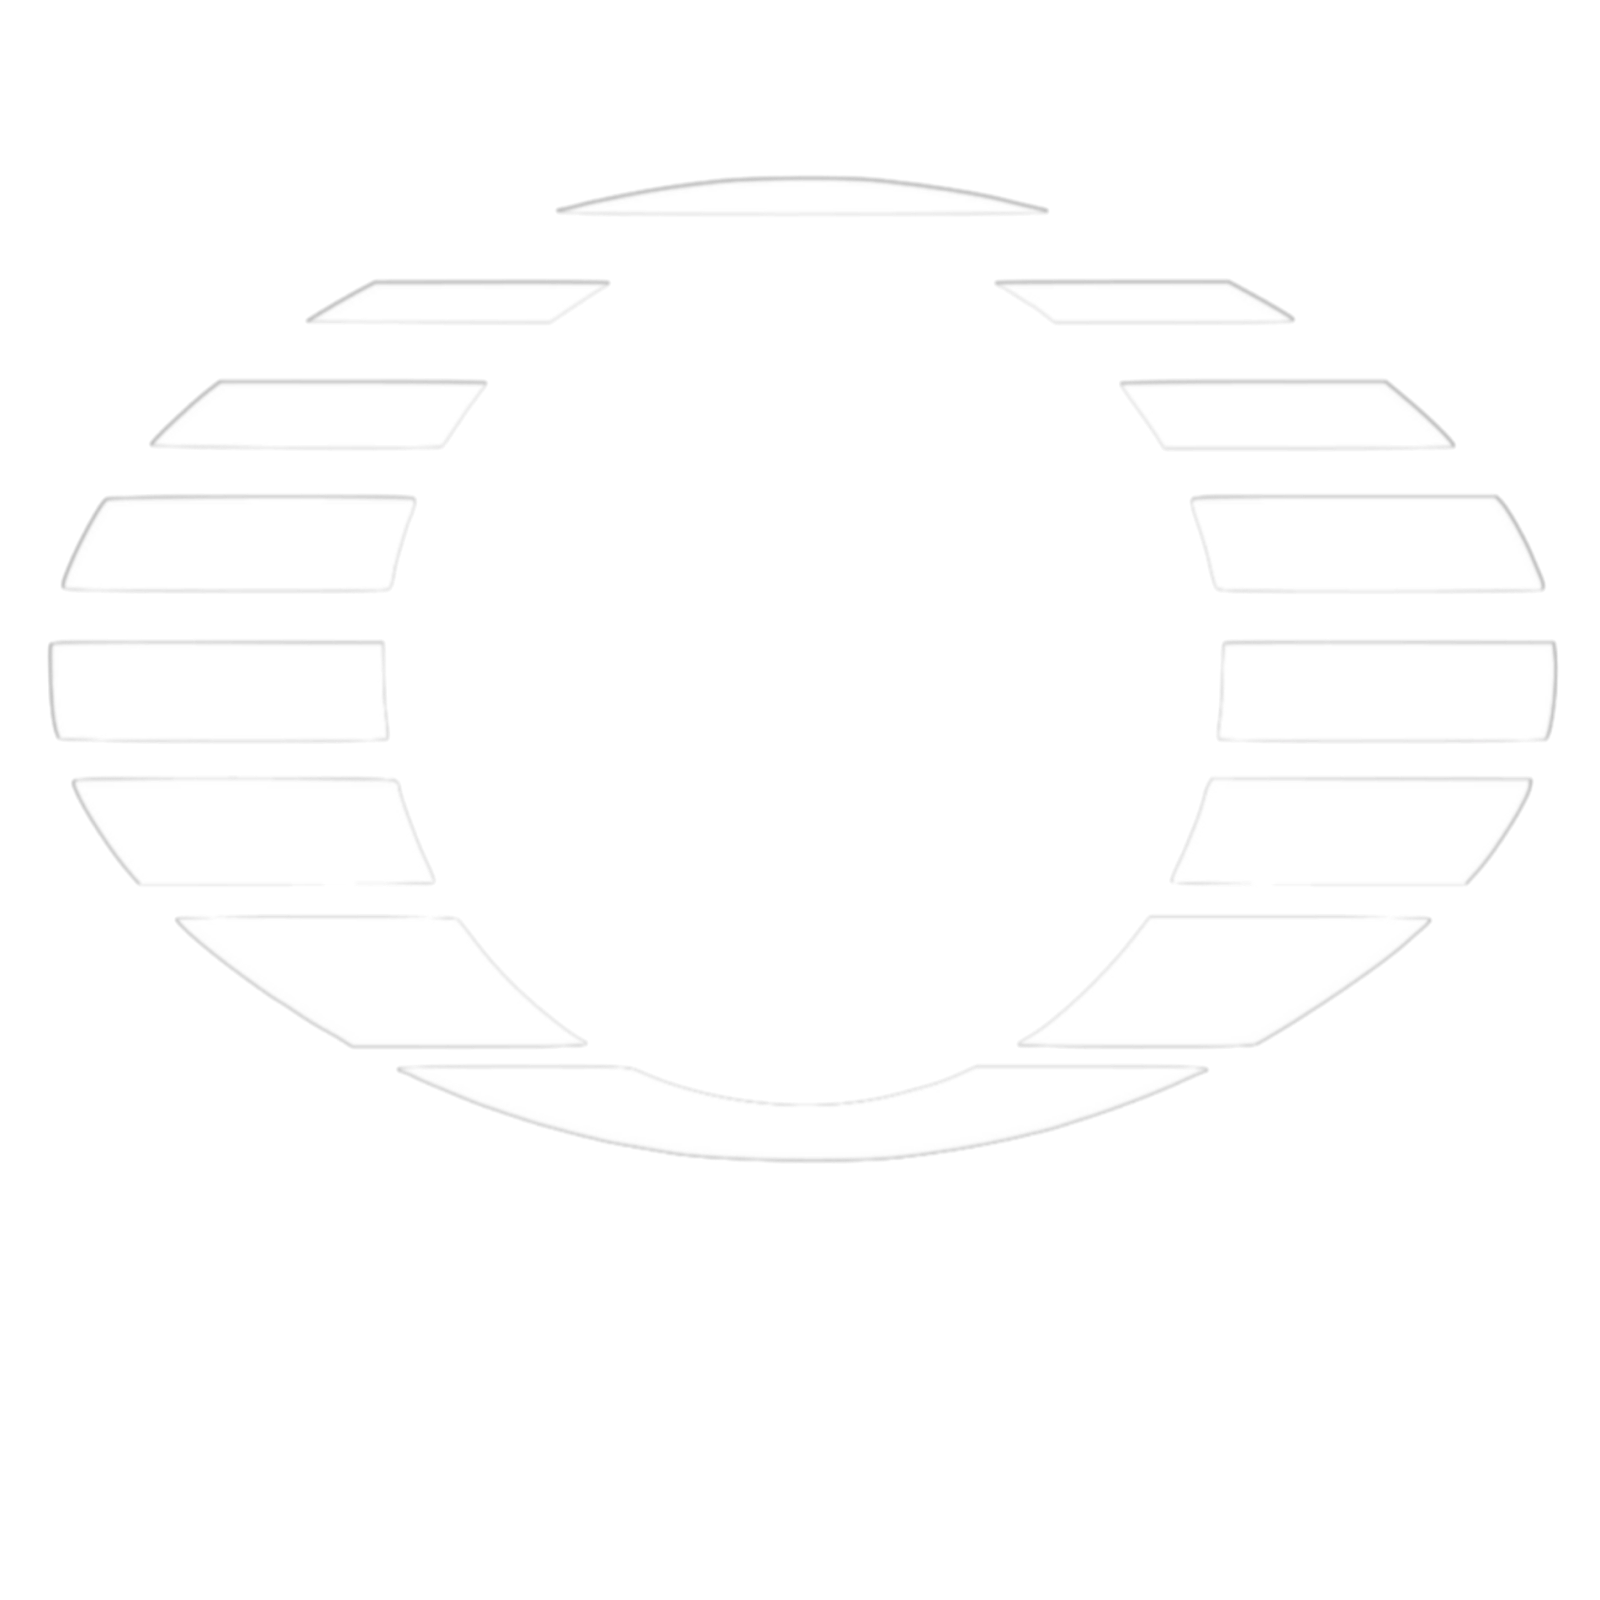 Televisa Play